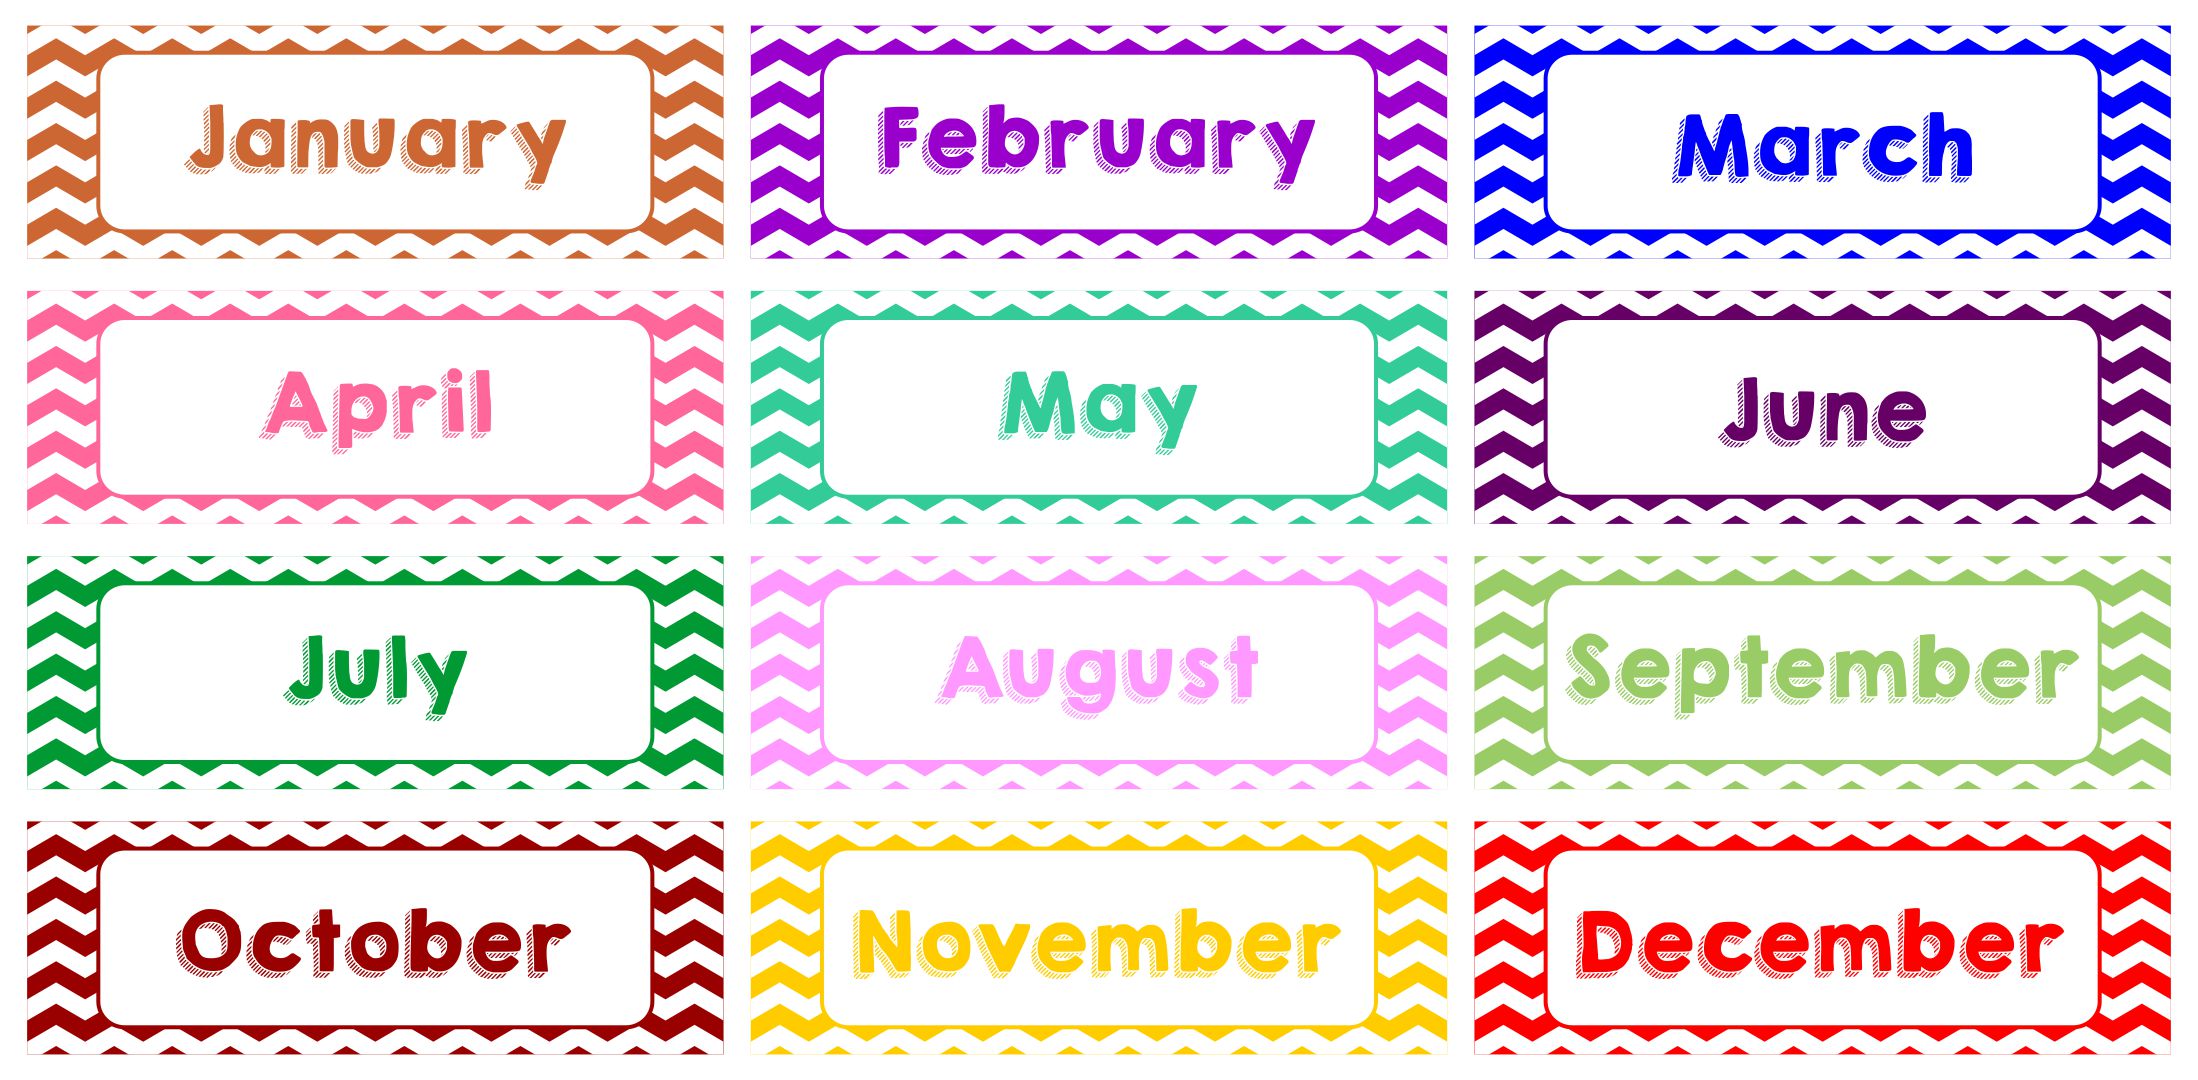 8-best-images-of-printable-calendar-month-labels-free-printable-calendar-headers-months